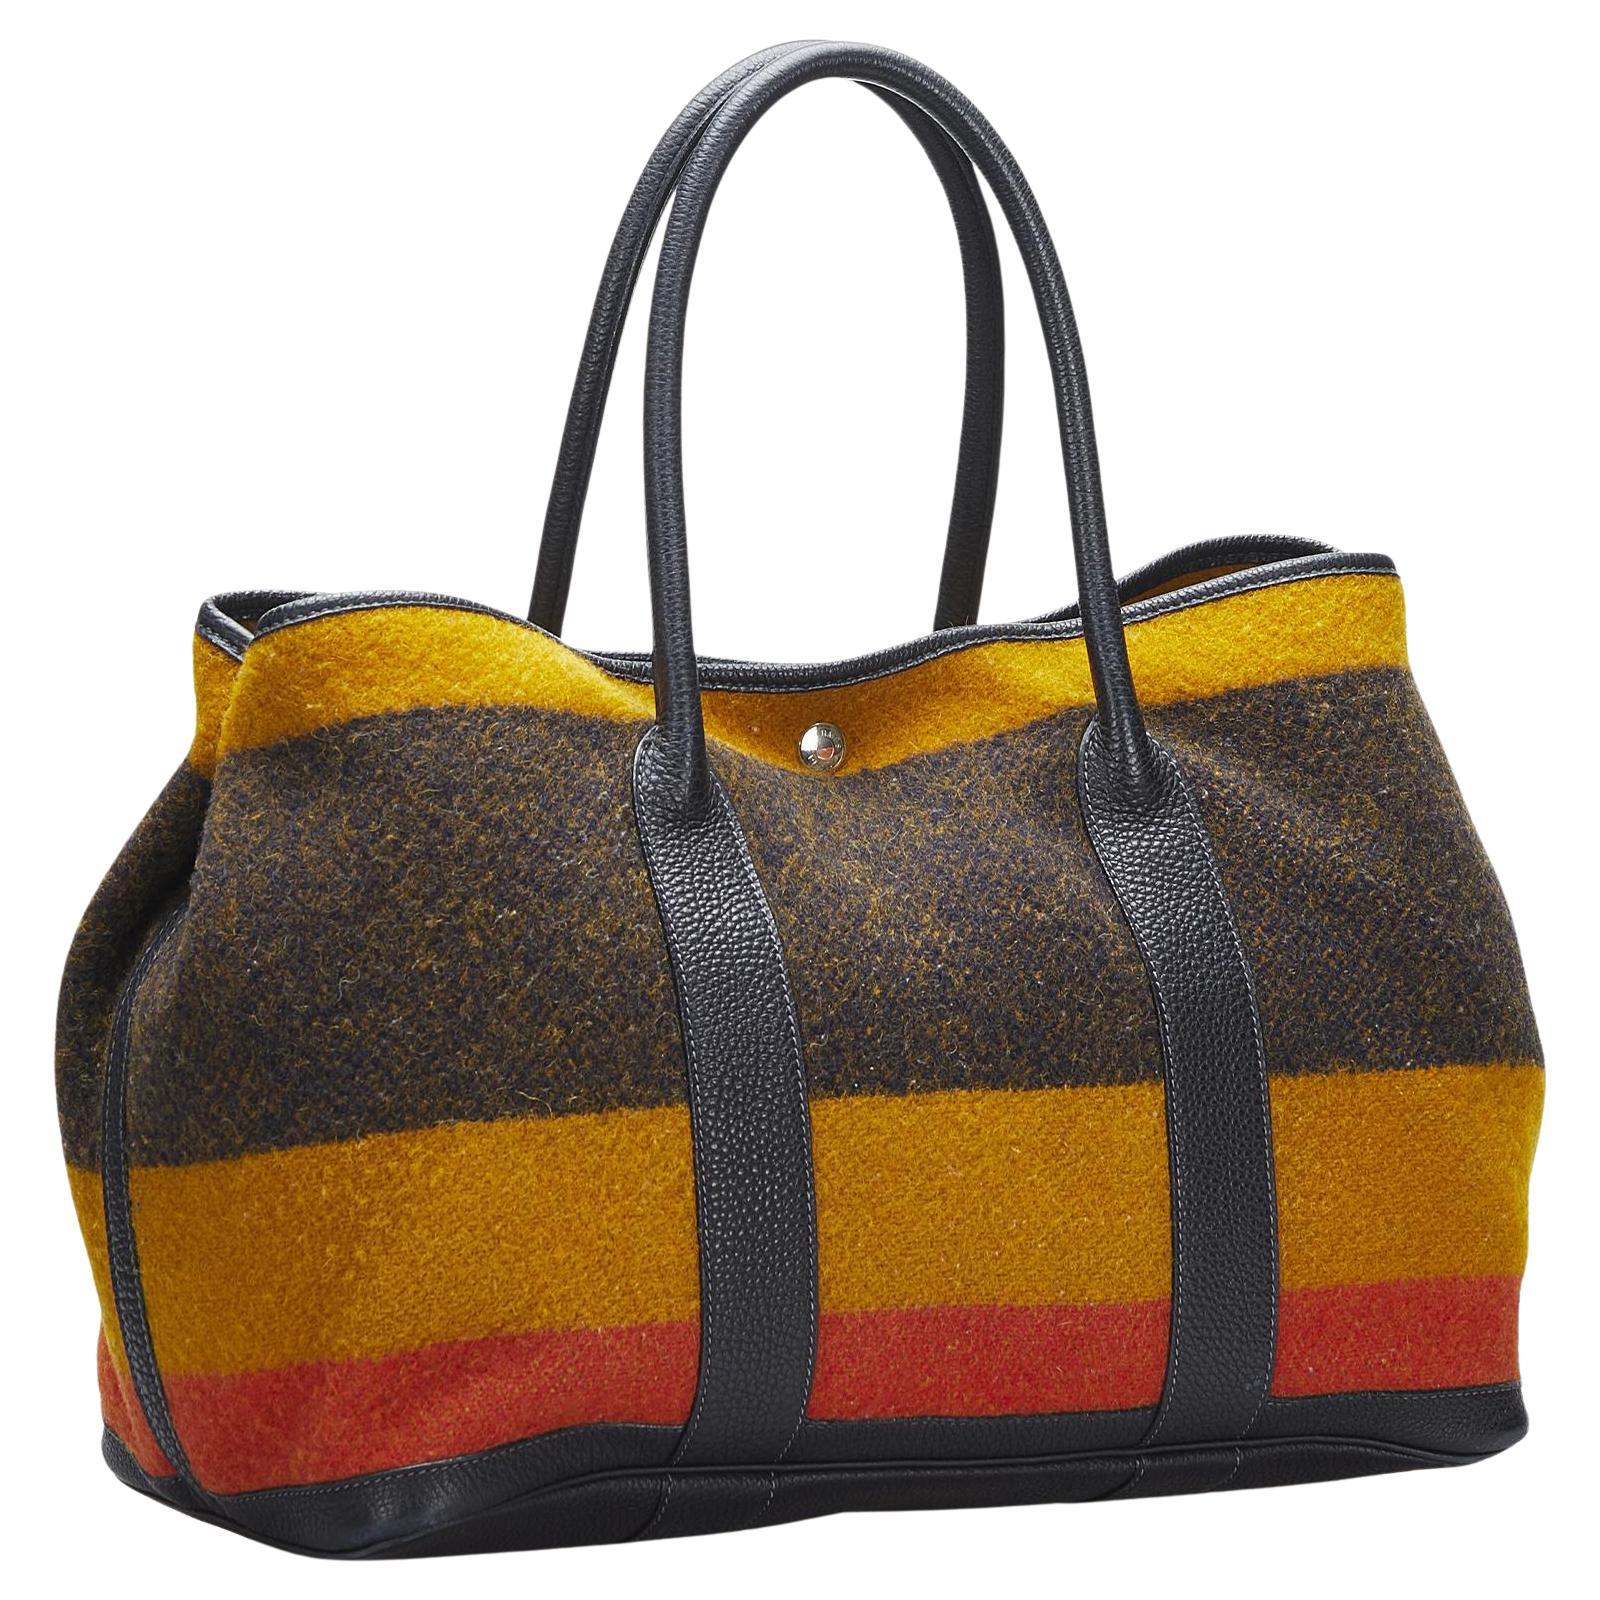 Garden Party Hermès Handbags for Women - Vestiaire Collective